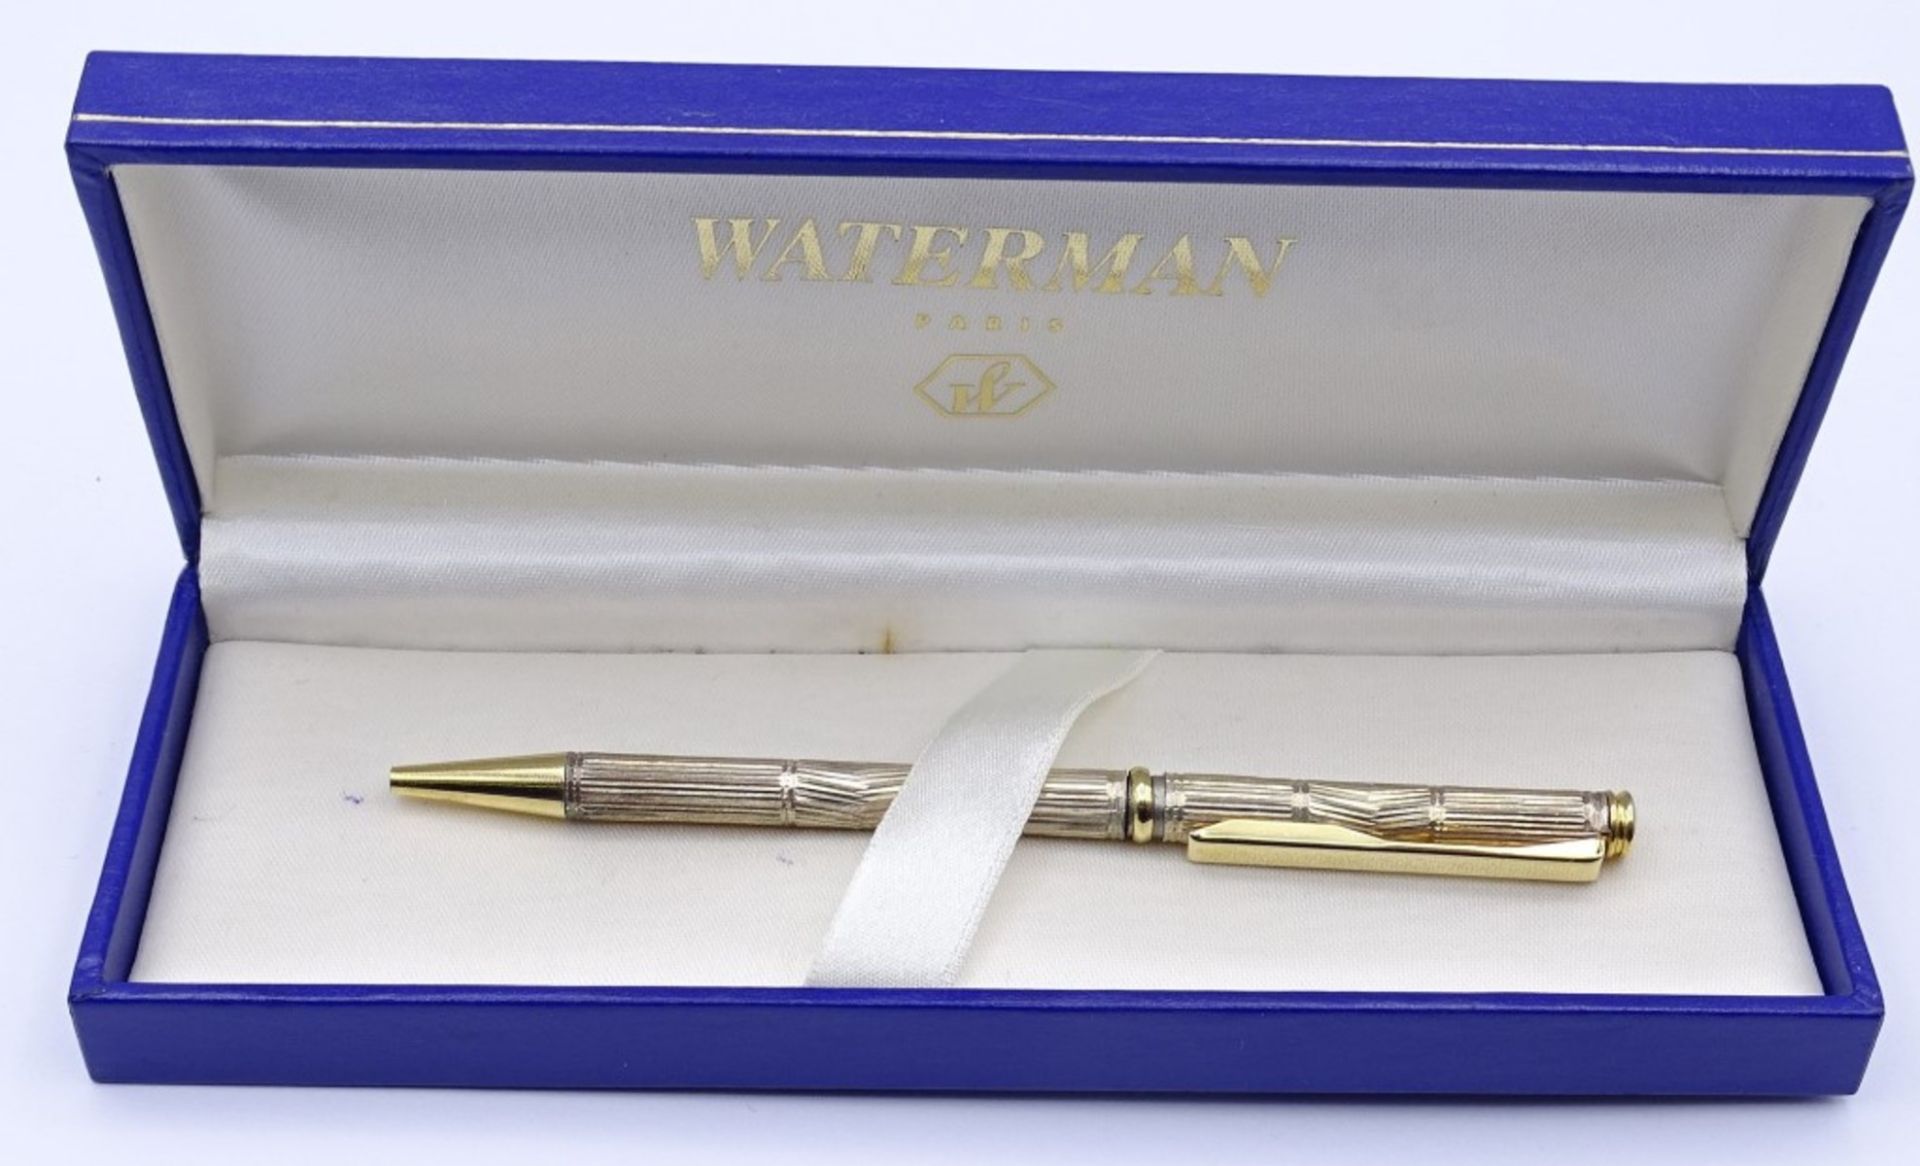 Kugelschreiber in Sterling Silber 0.925, in Waterman Schachtel,Kugelschreiber wohl kein Waterman